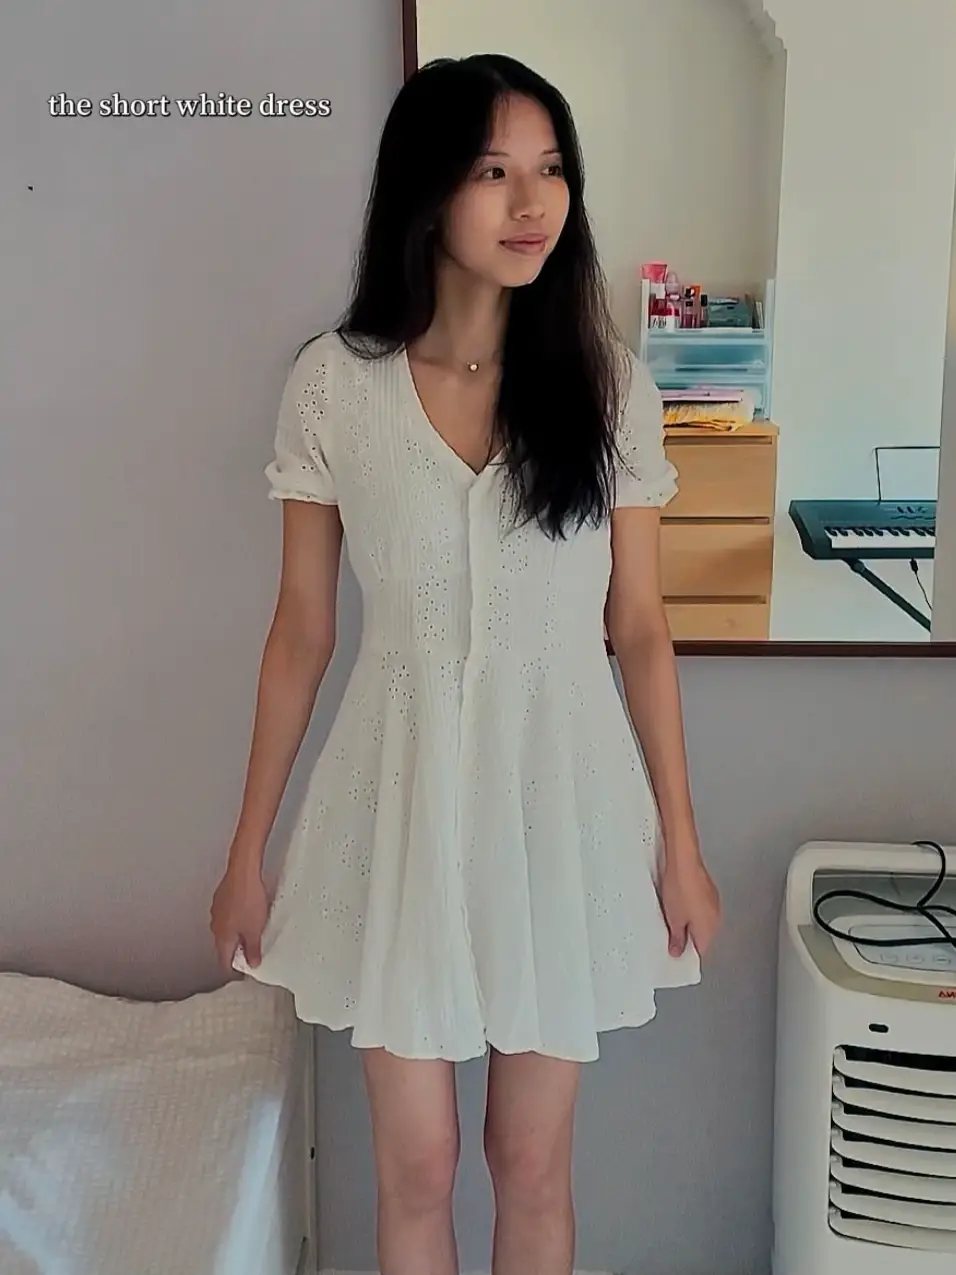 too short dress